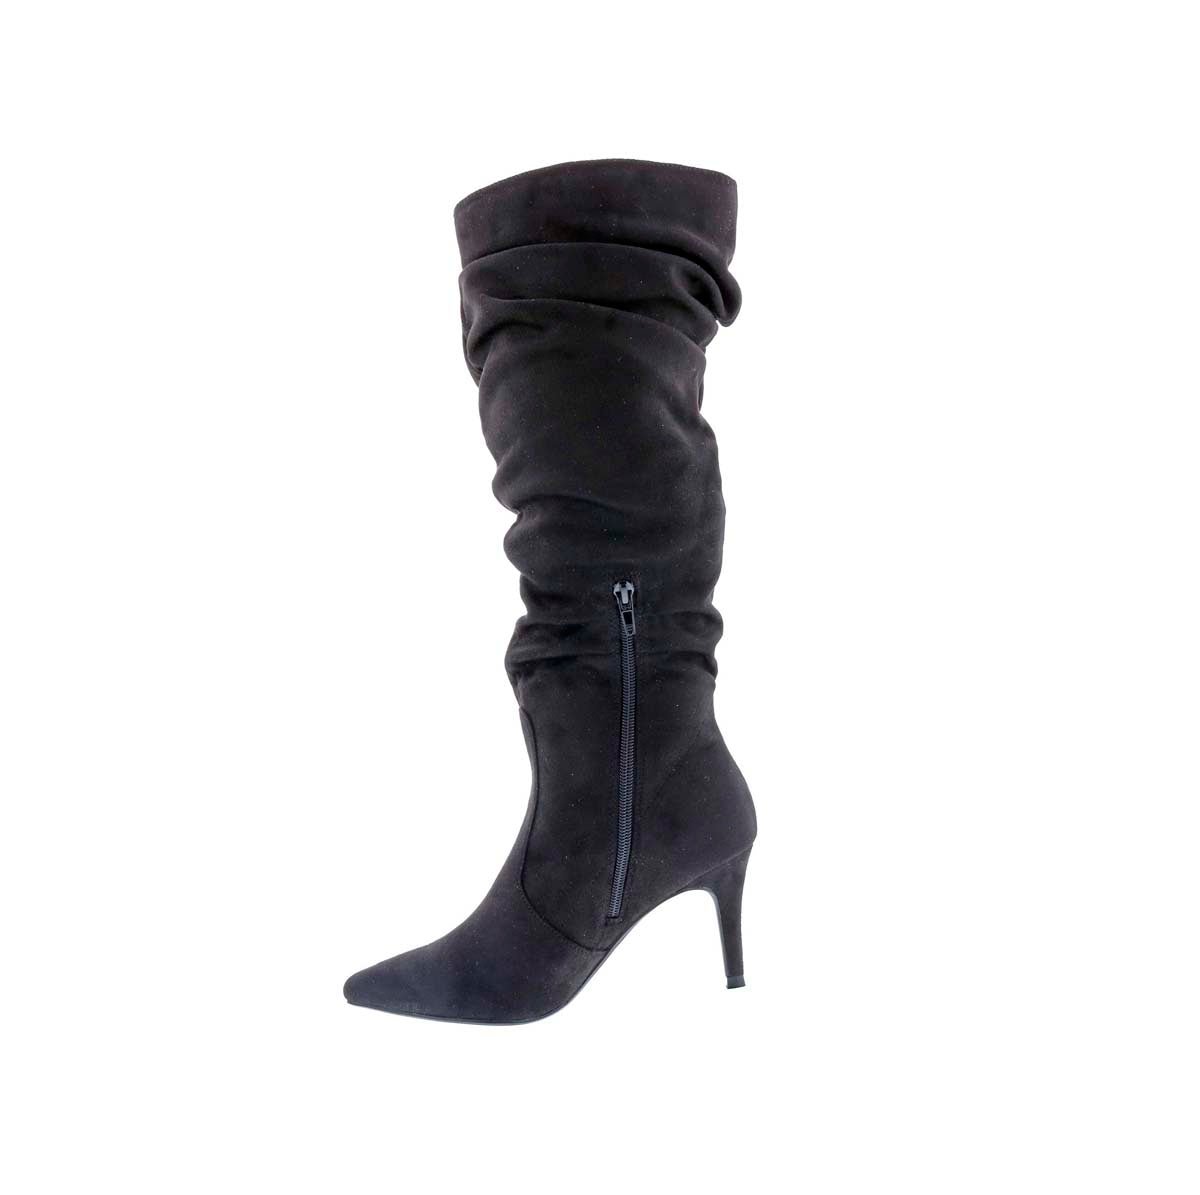 BELLINI AMP MID HIGH HEEL WOMEN BOOT IN BLACK MICROSUEDE - TLW Shoes